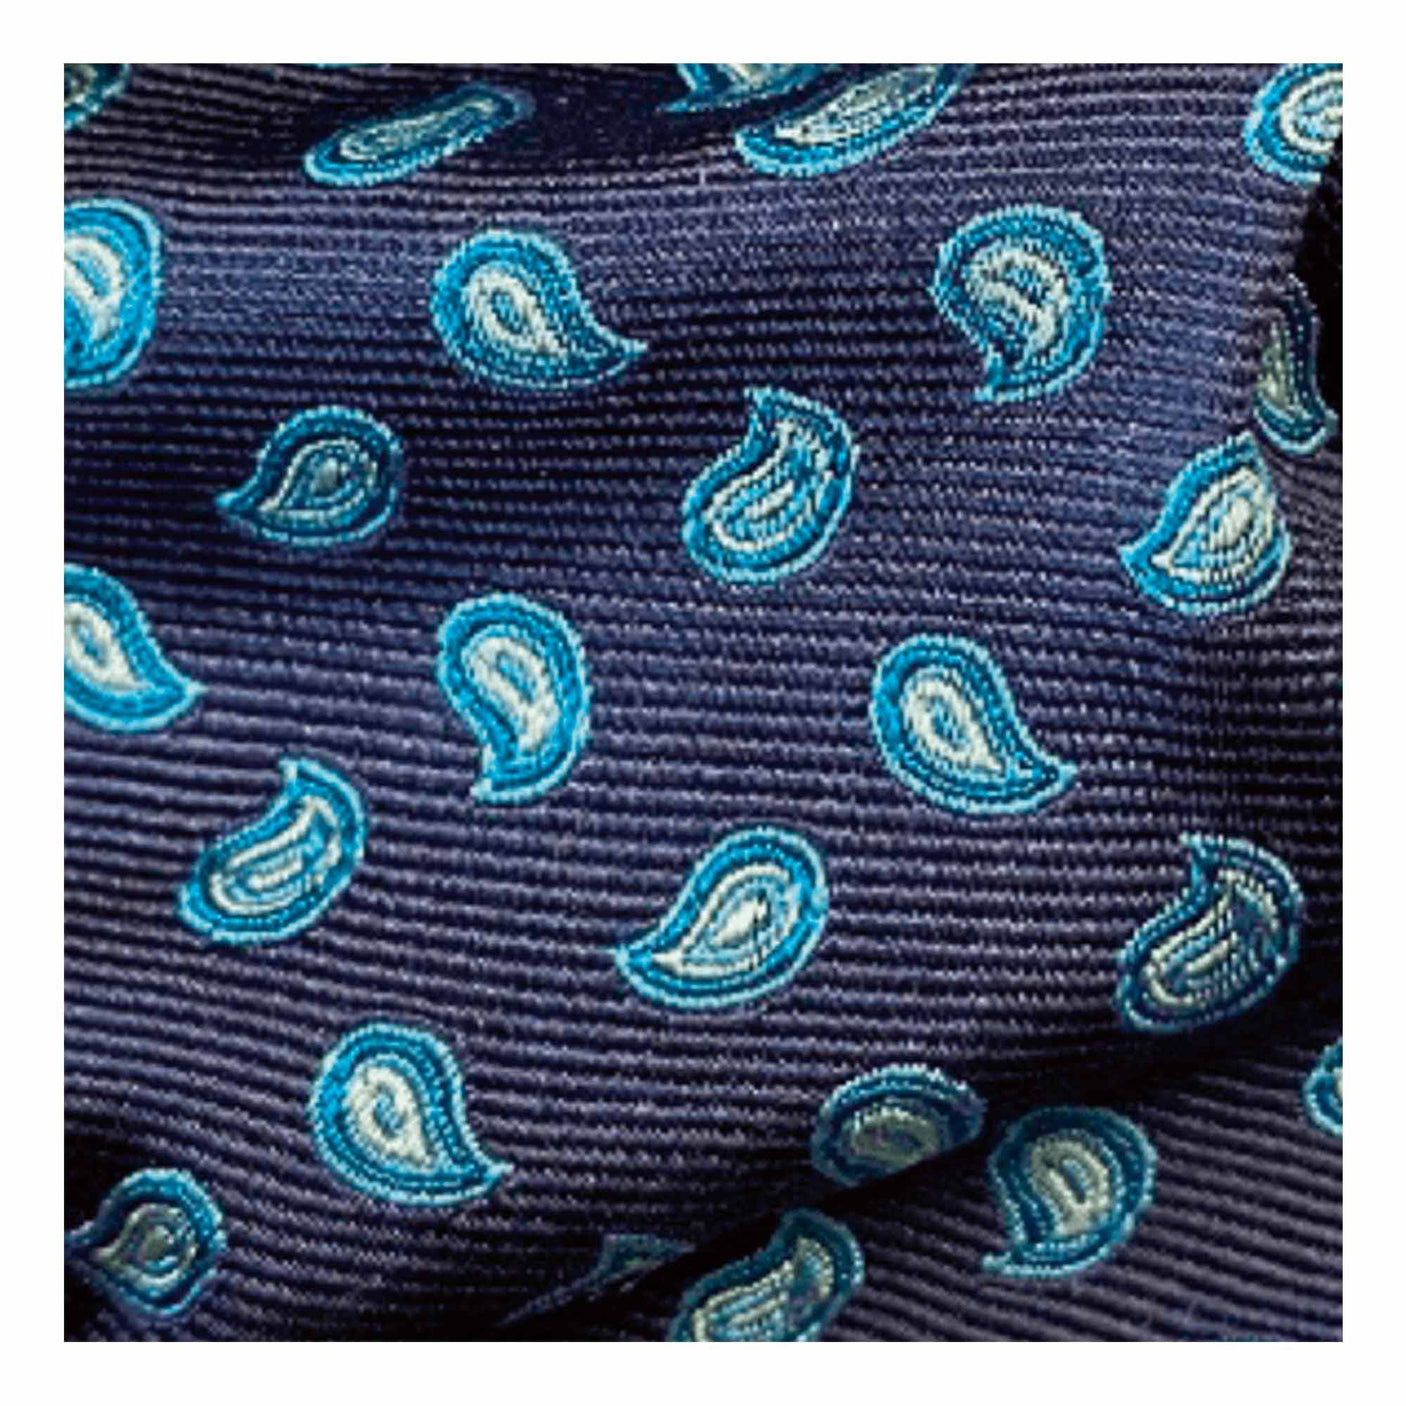 Cravate petit paisley bleu roi / bleu marine